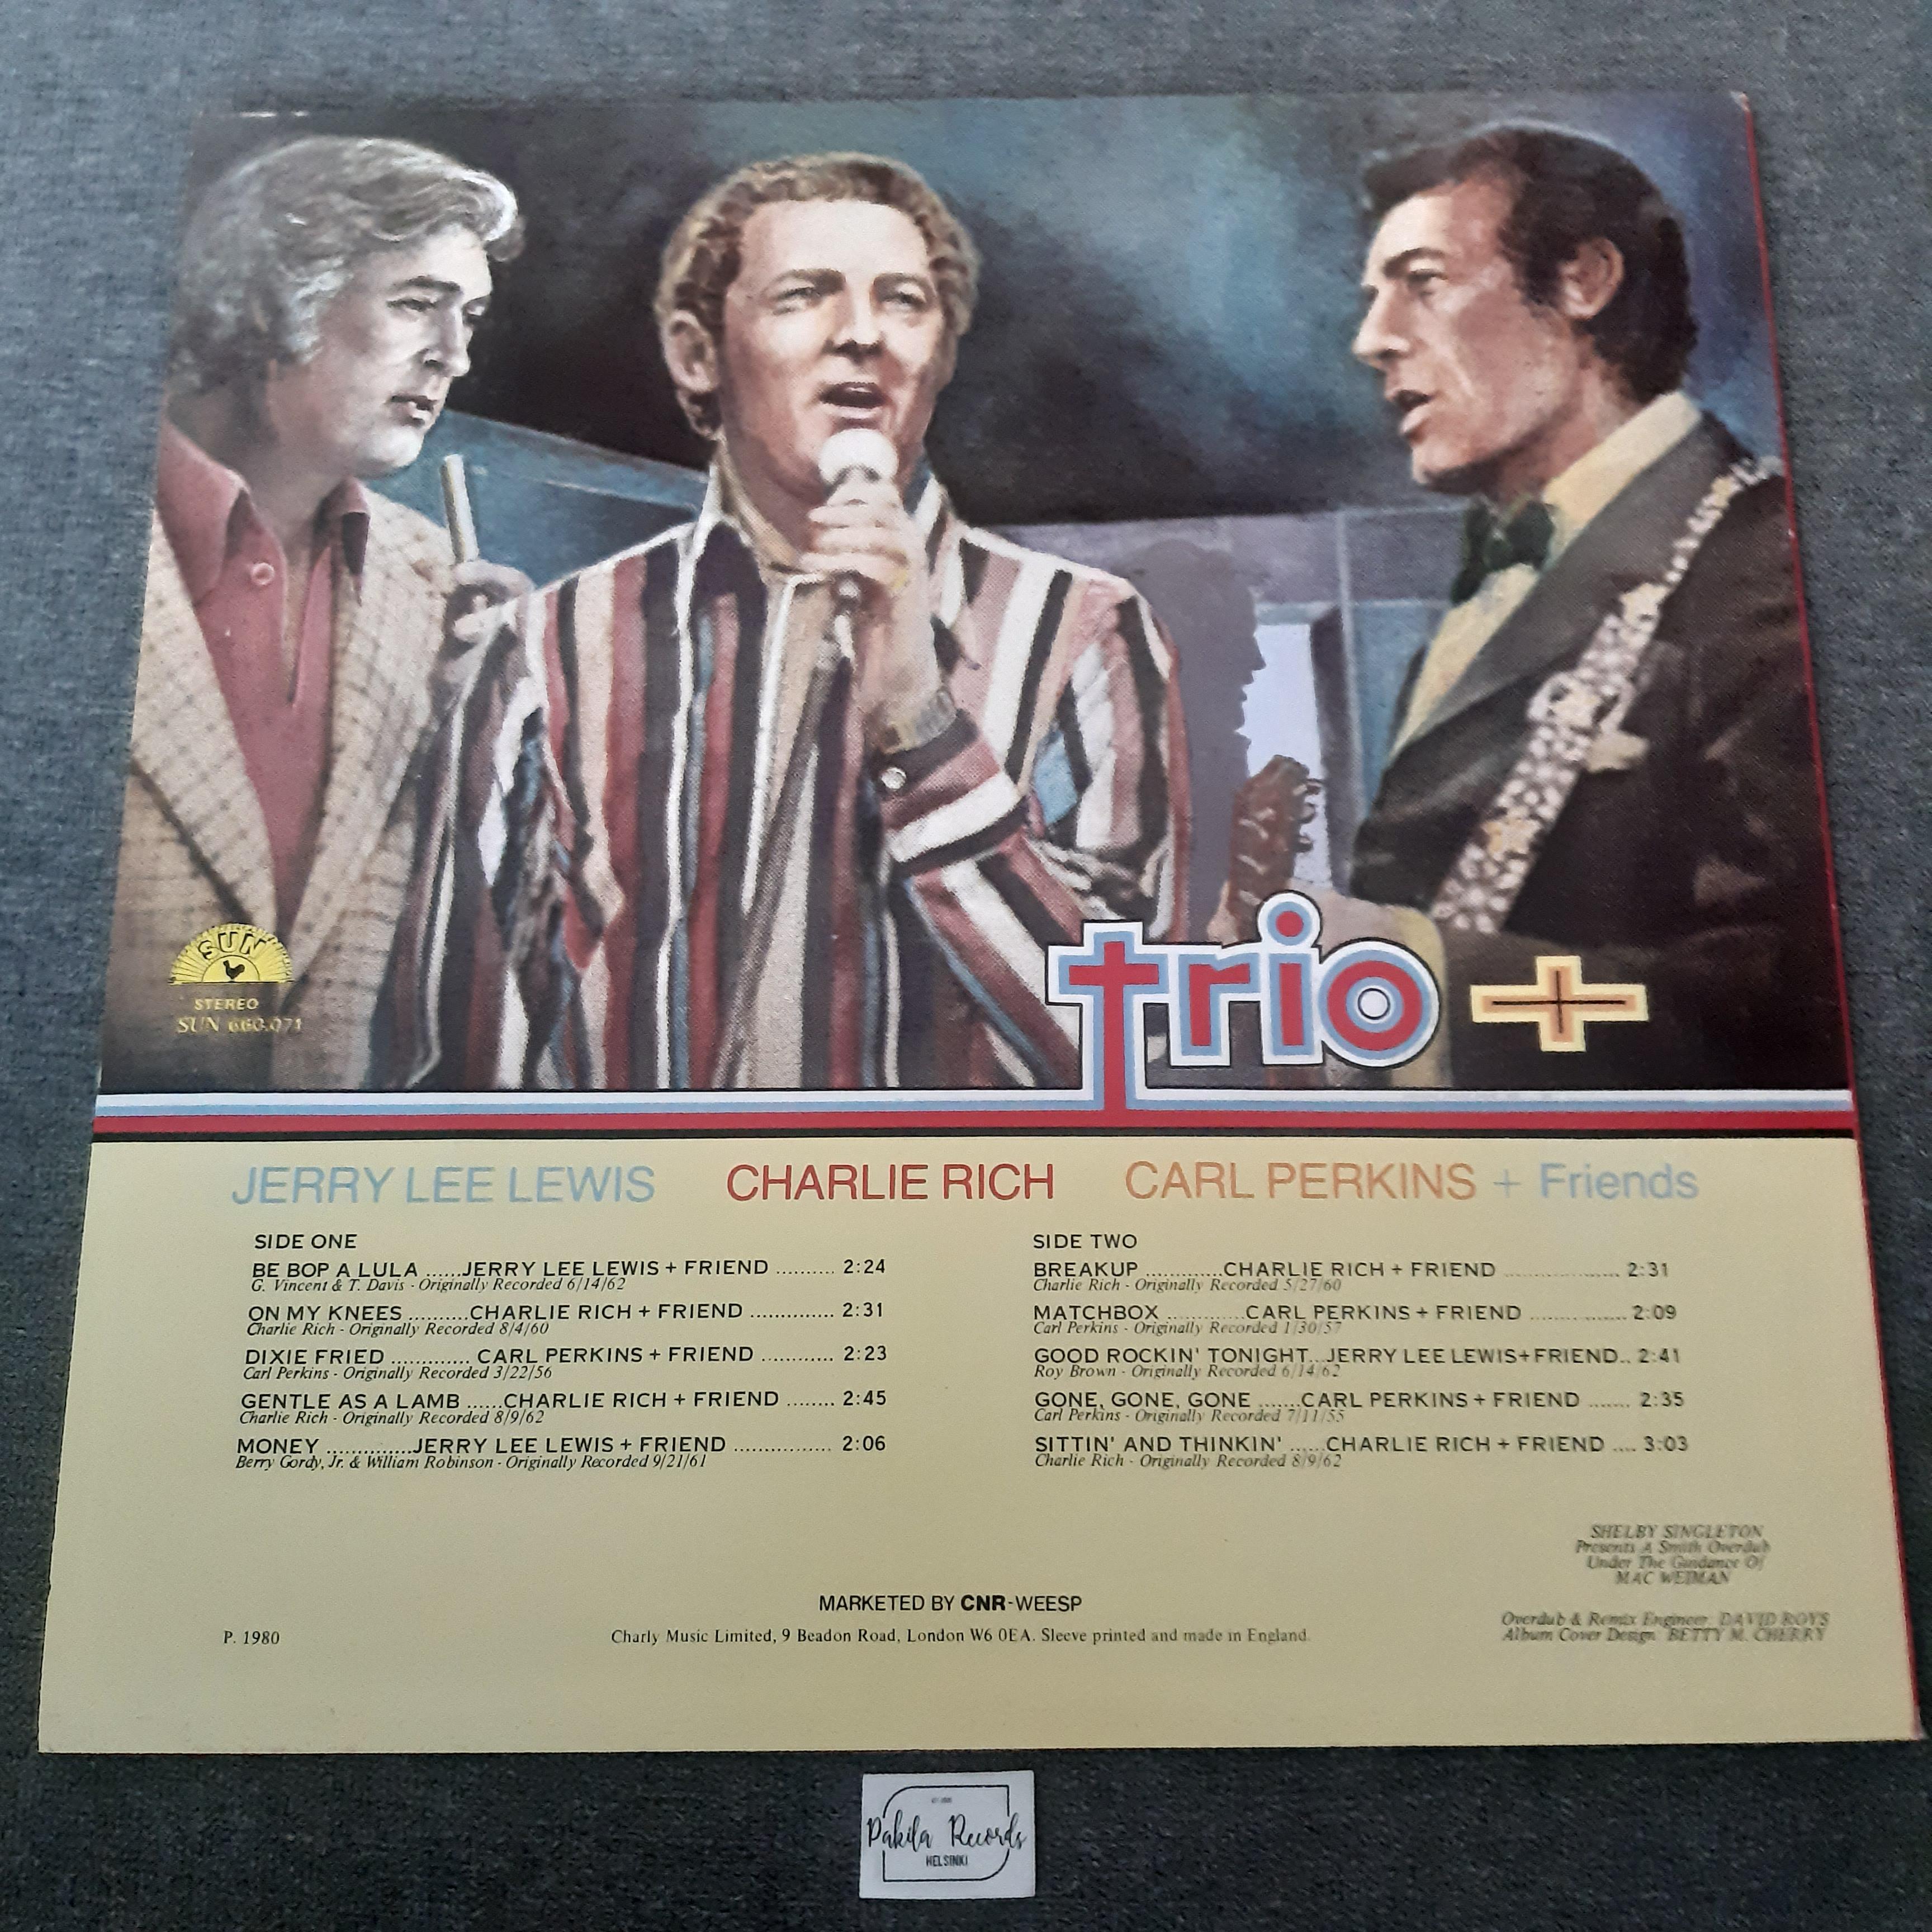 Jerry Lee Lewis / Charlie Rich / Carl Perkins - Trio + - LP (käytetty)